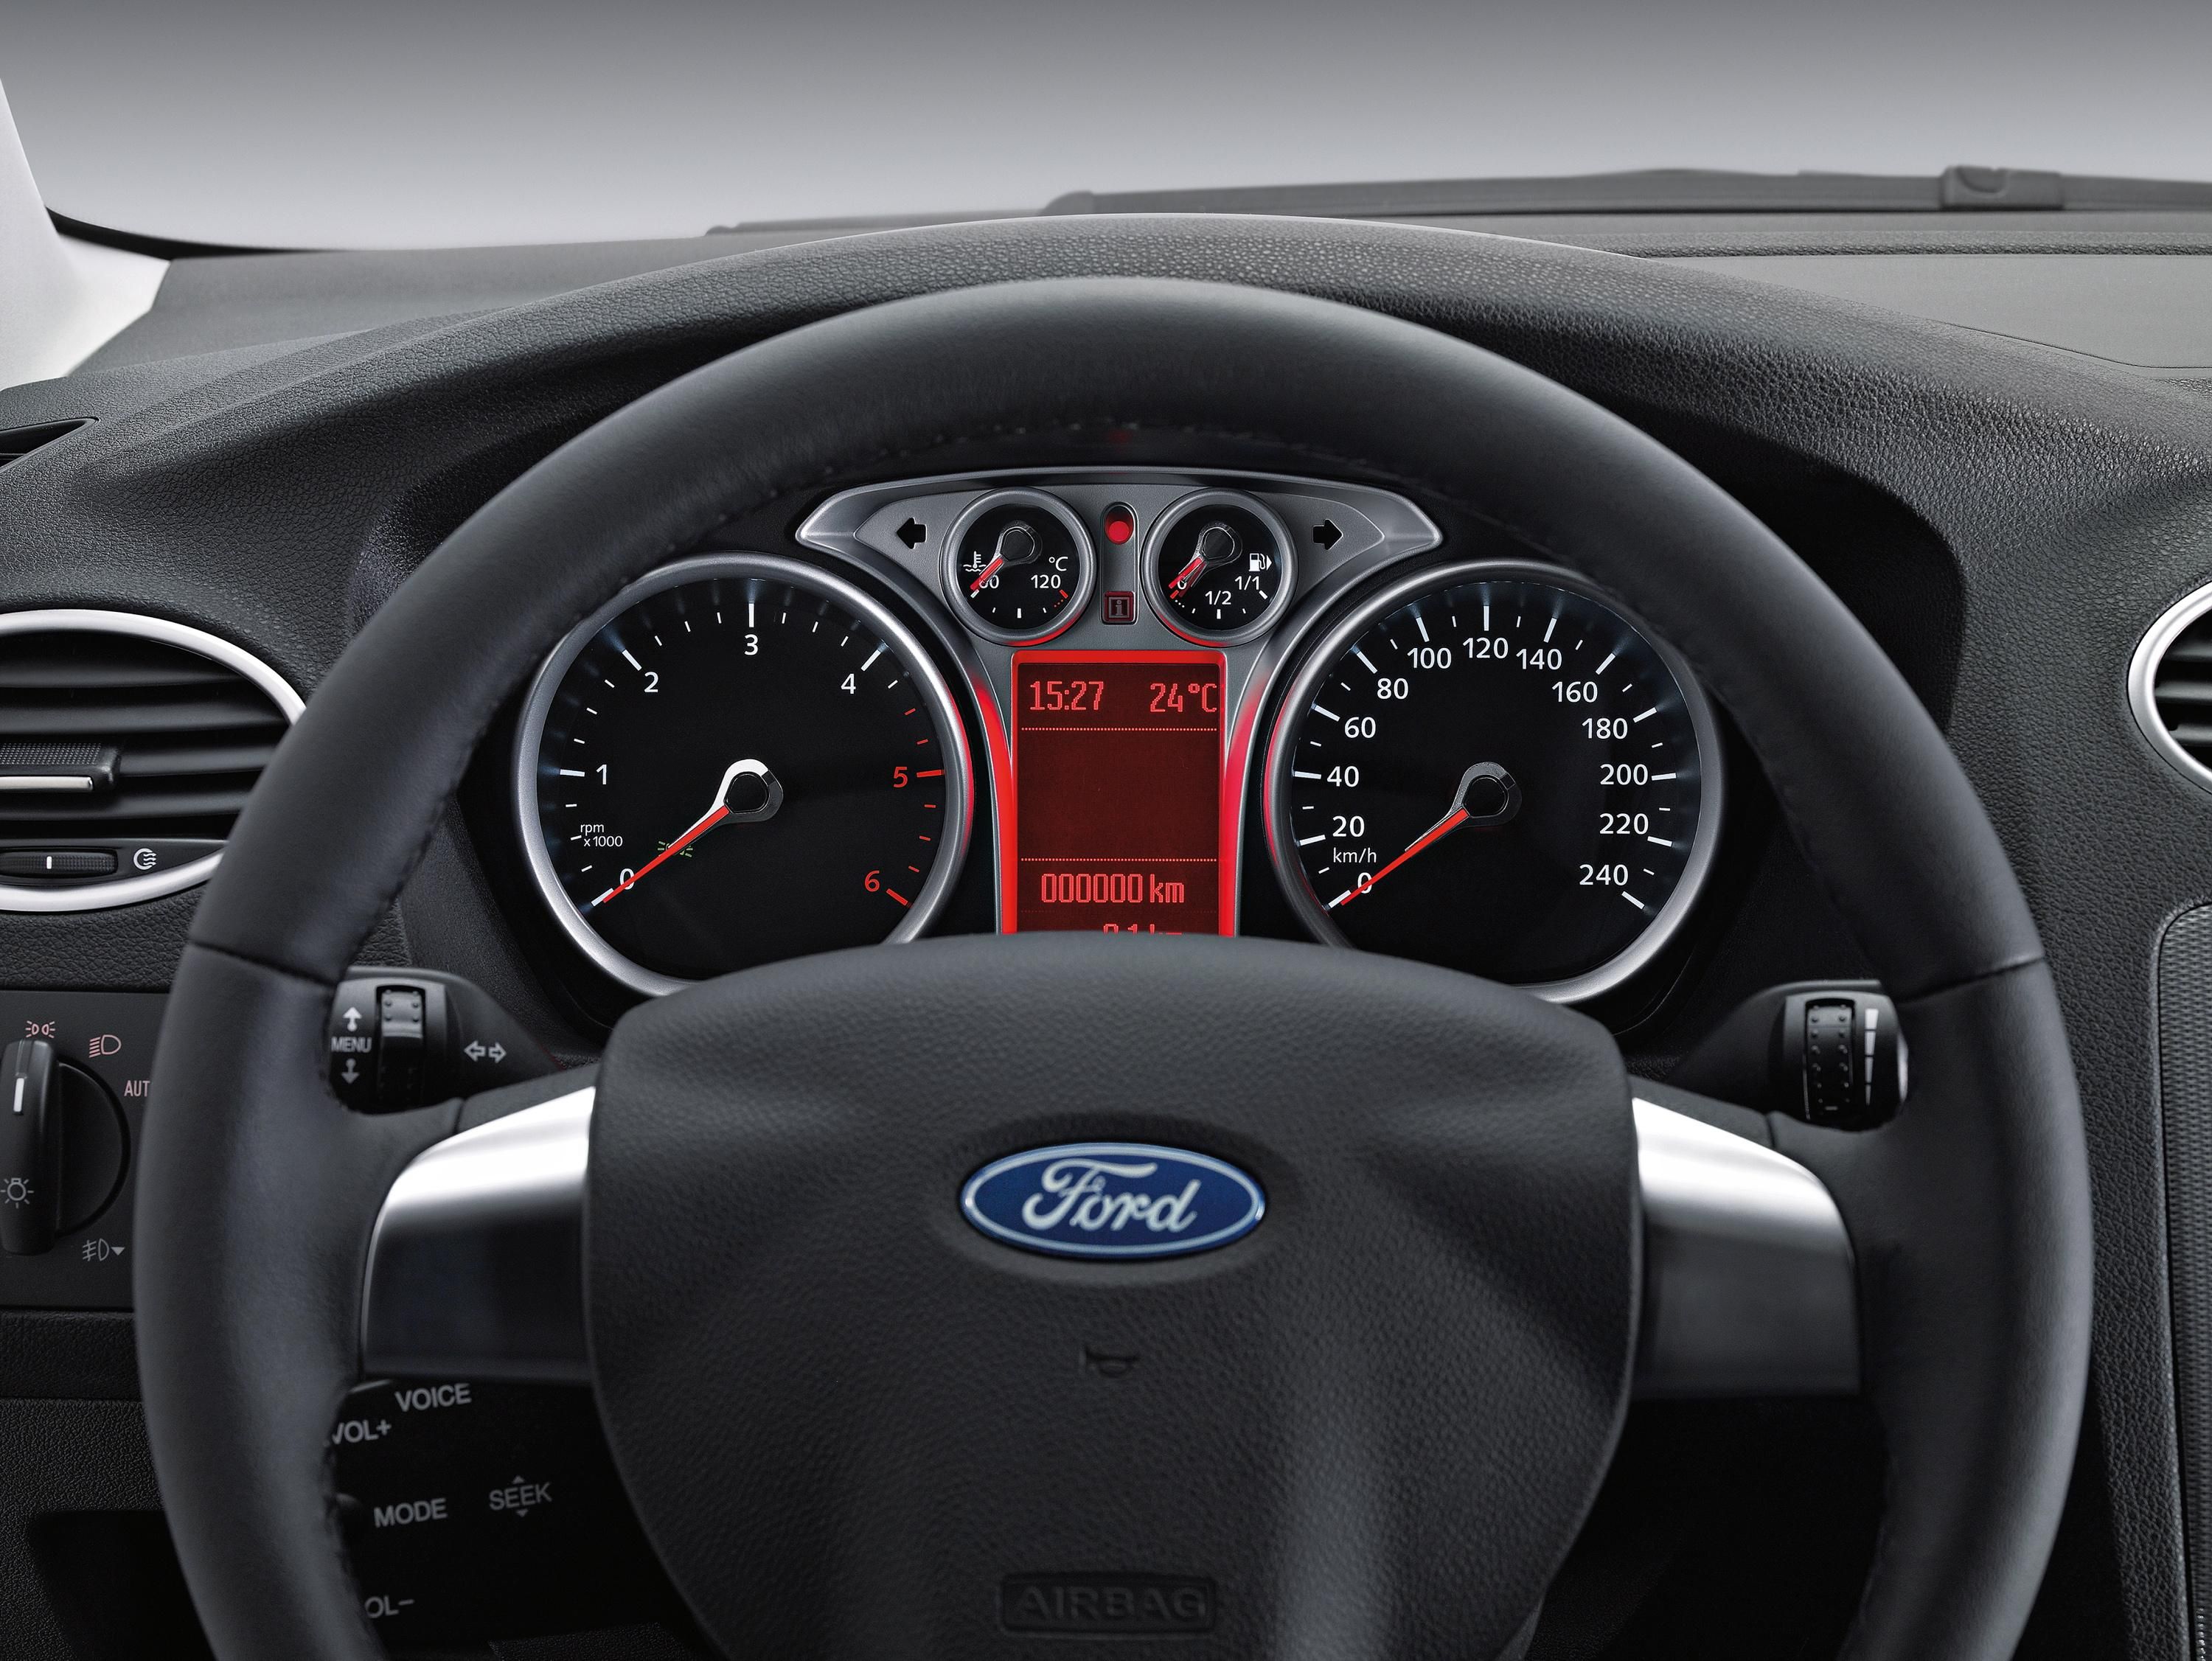 2009 Ford Focus (European model)